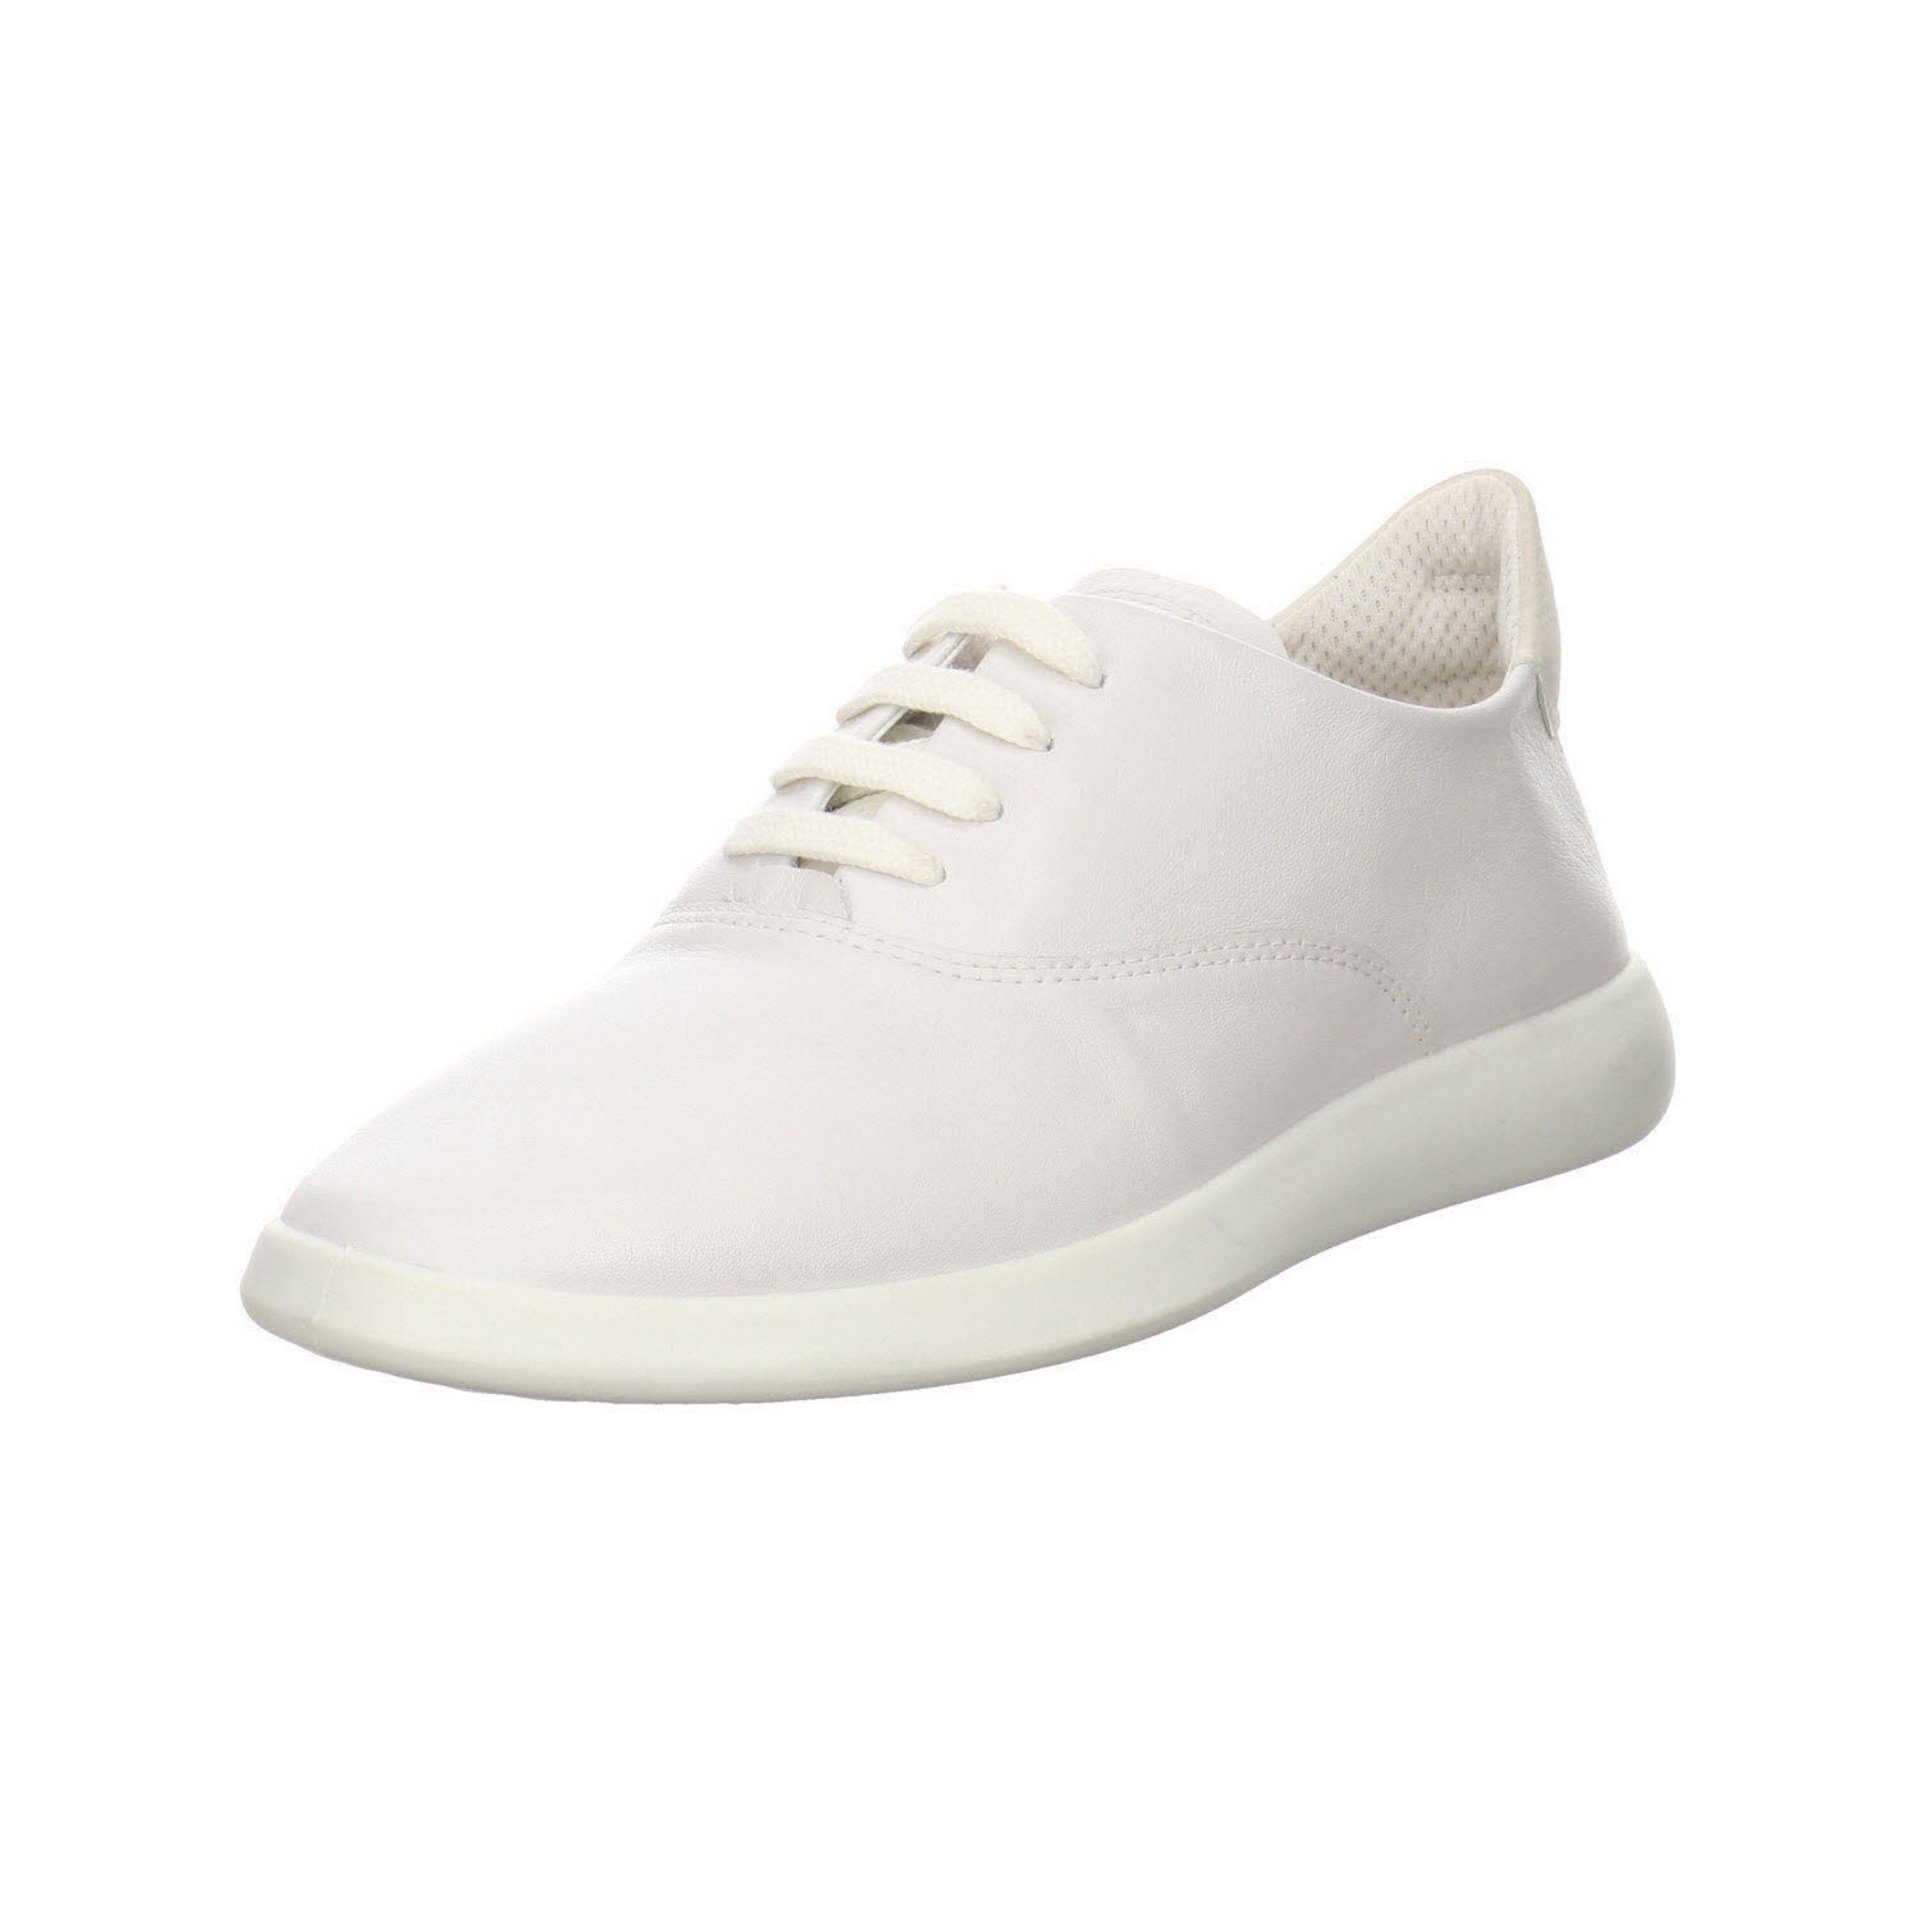 Sneaker WHITE/SHADOW Sneaker Ecco WHITE Glattleder Schnürschuh Damen Schuhe Minimalist